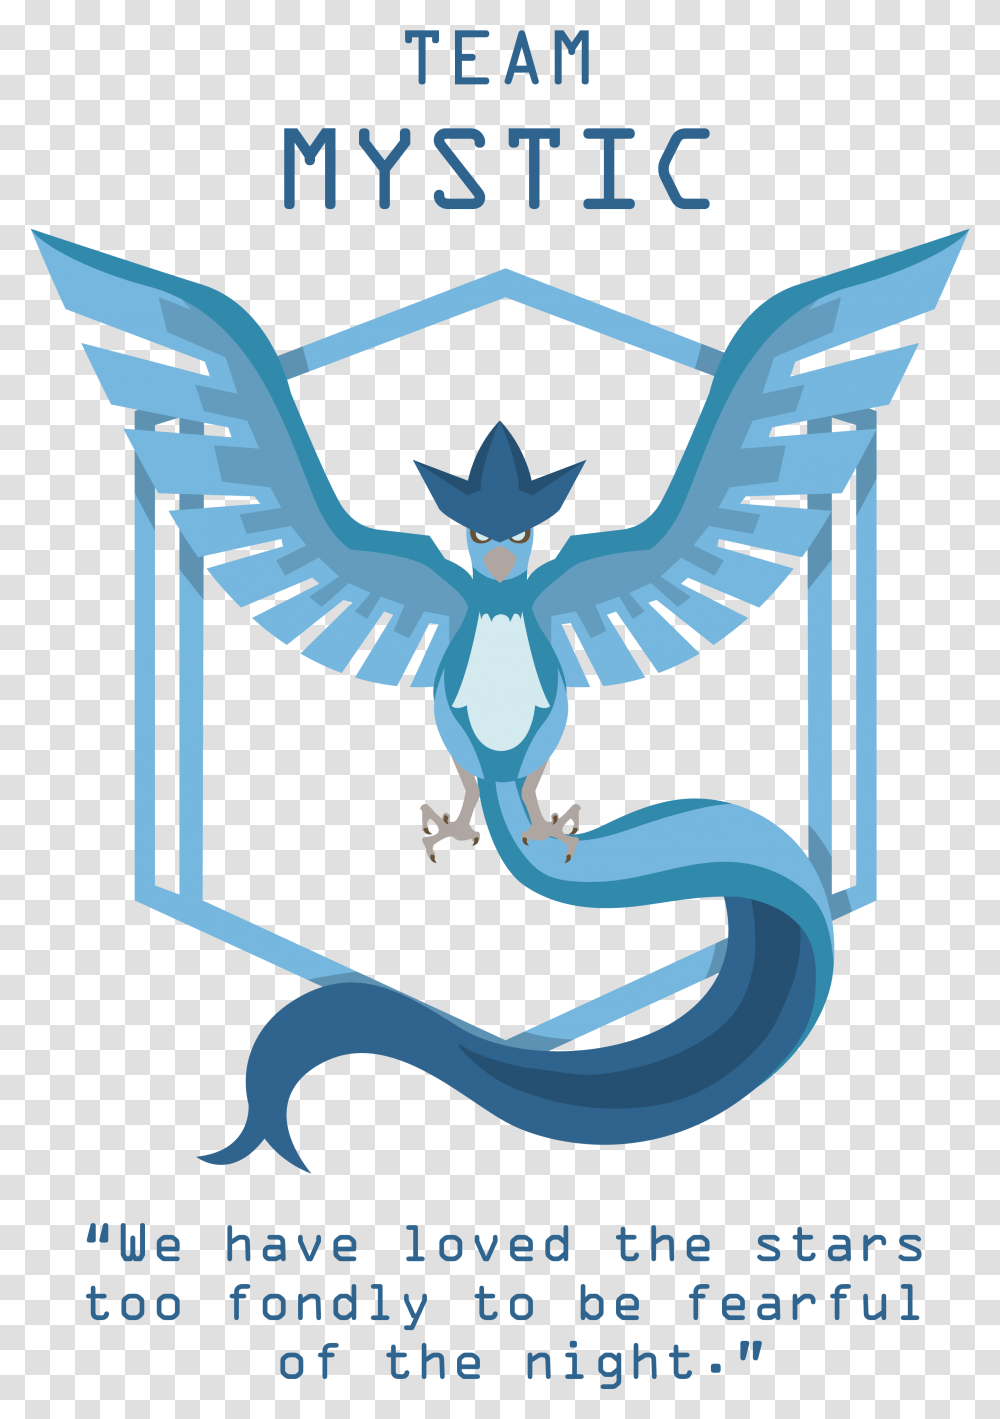 Pokemon Go Teams 5 Image Pokemon Go Logo Team Mystic, Emblem, Symbol, Poster, Advertisement Transparent Png